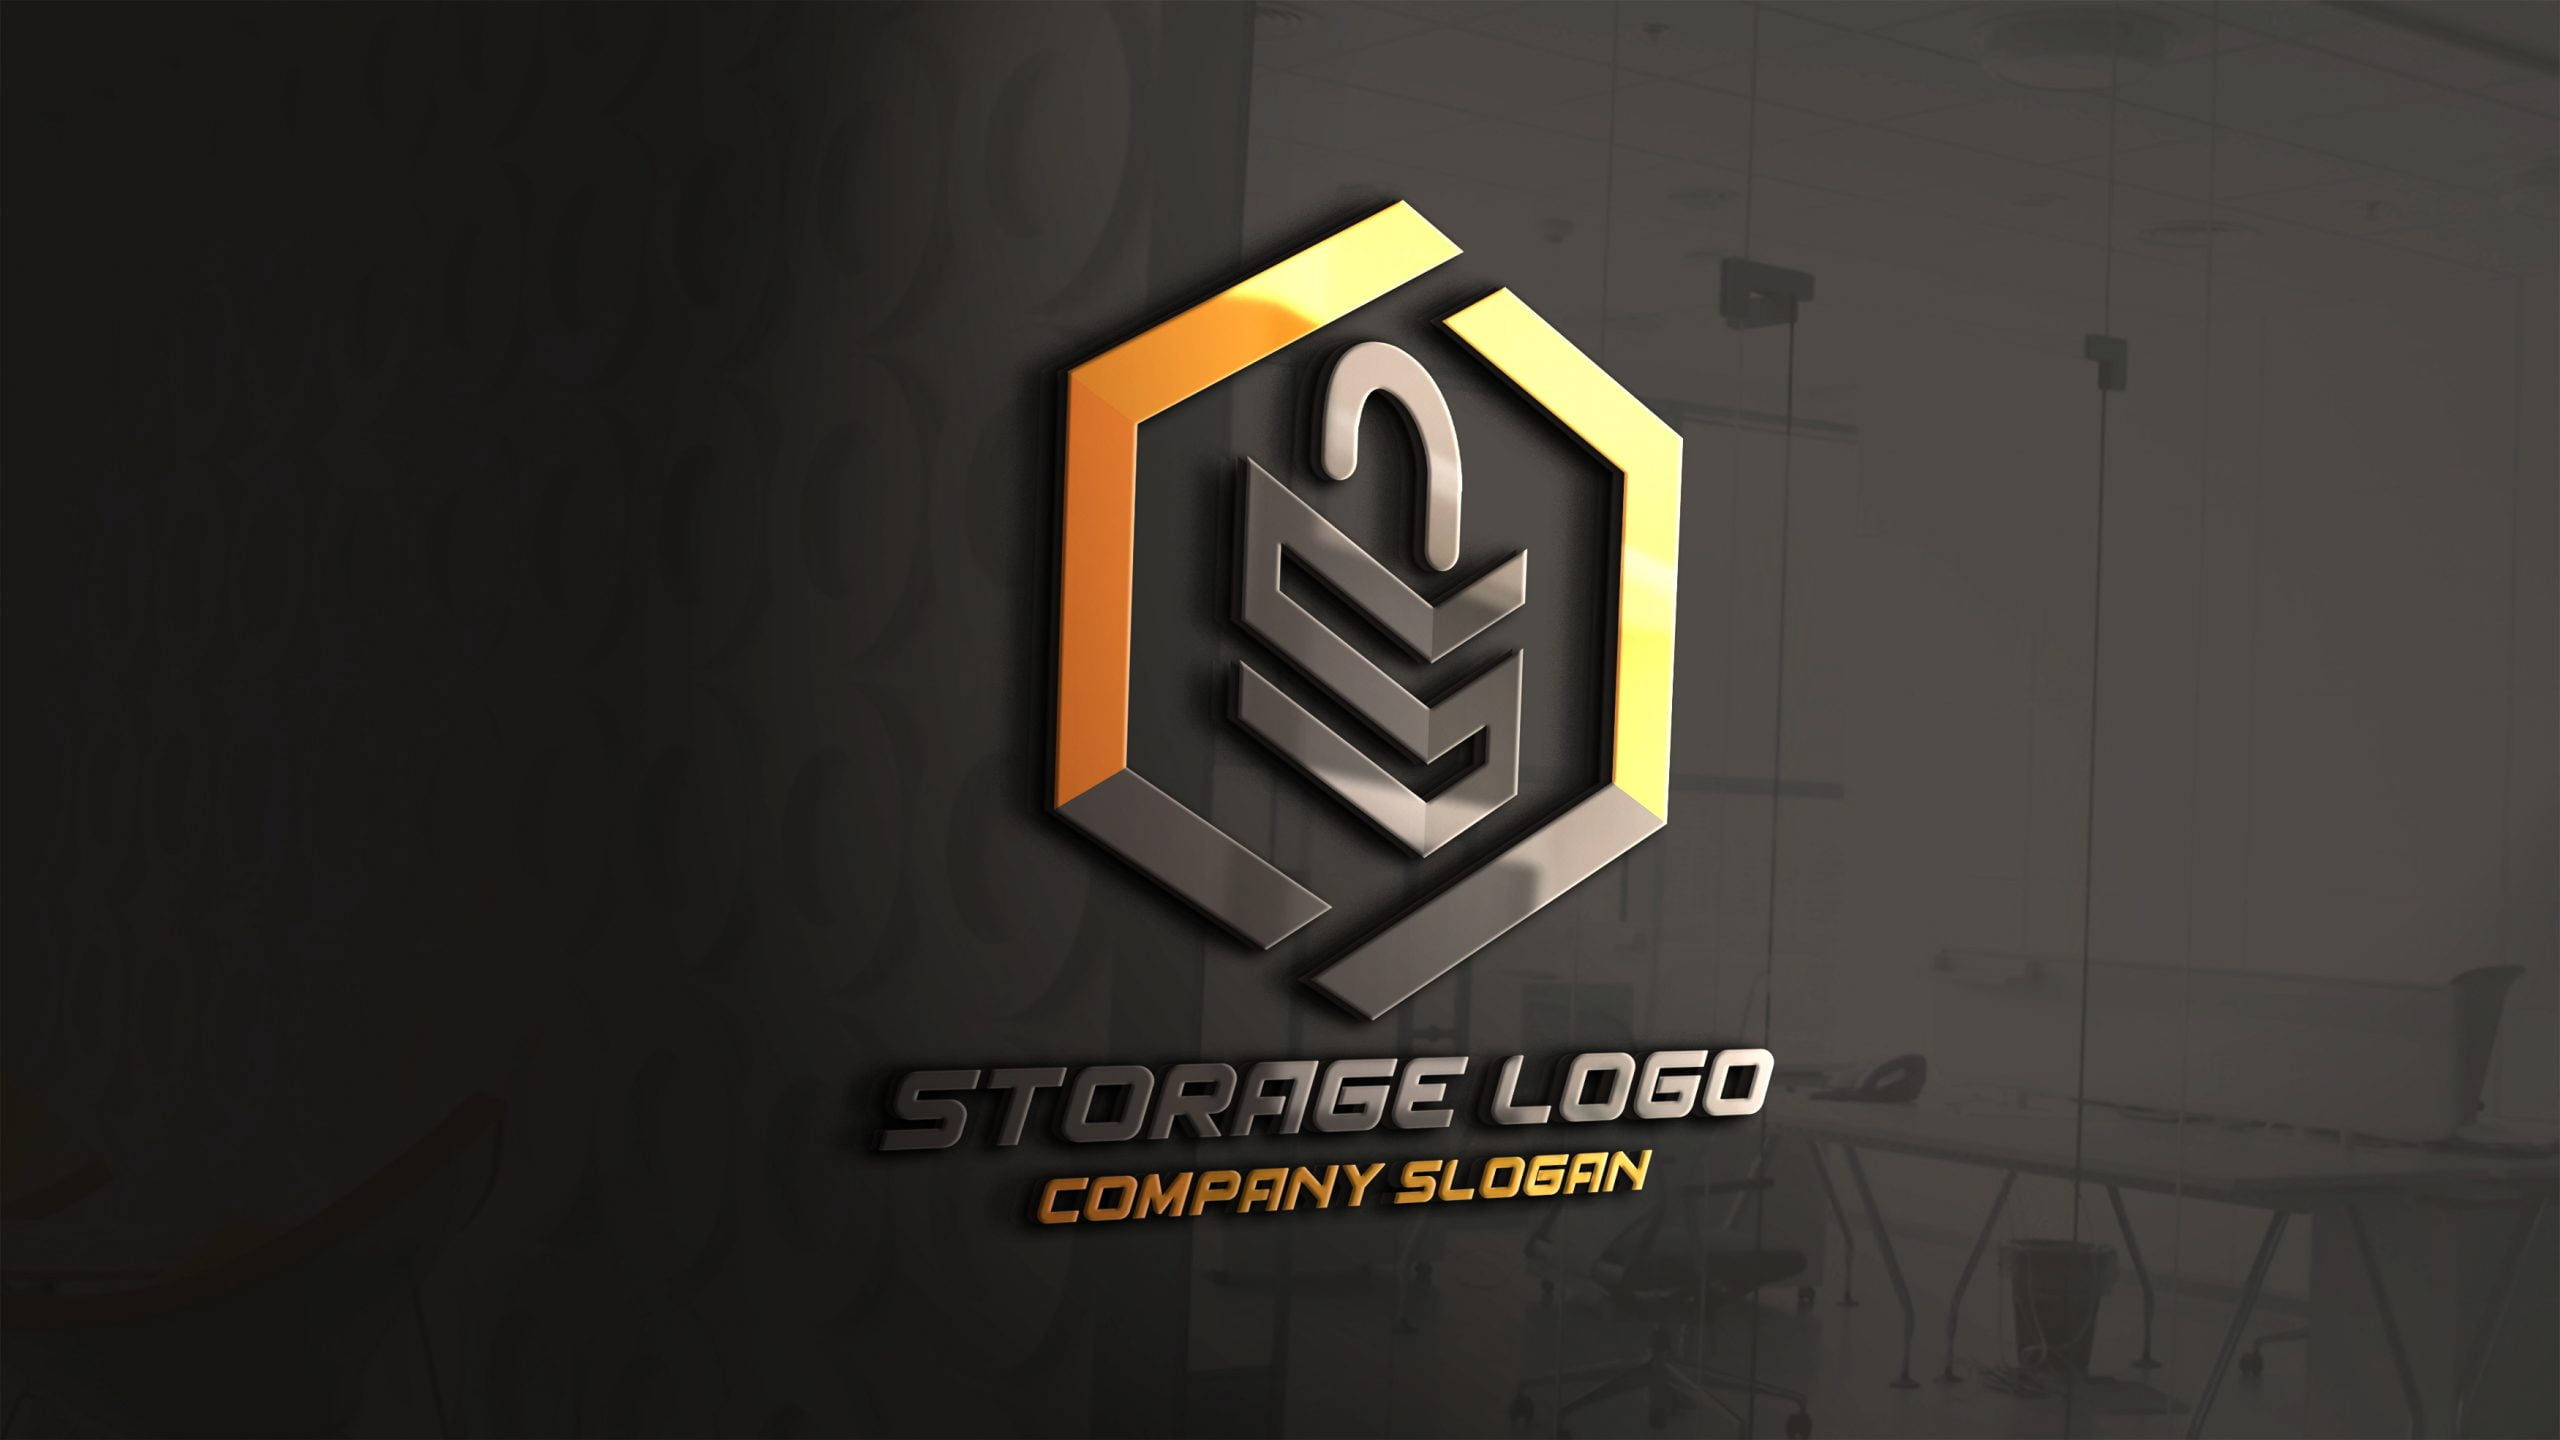 logo design photoshop tutorial